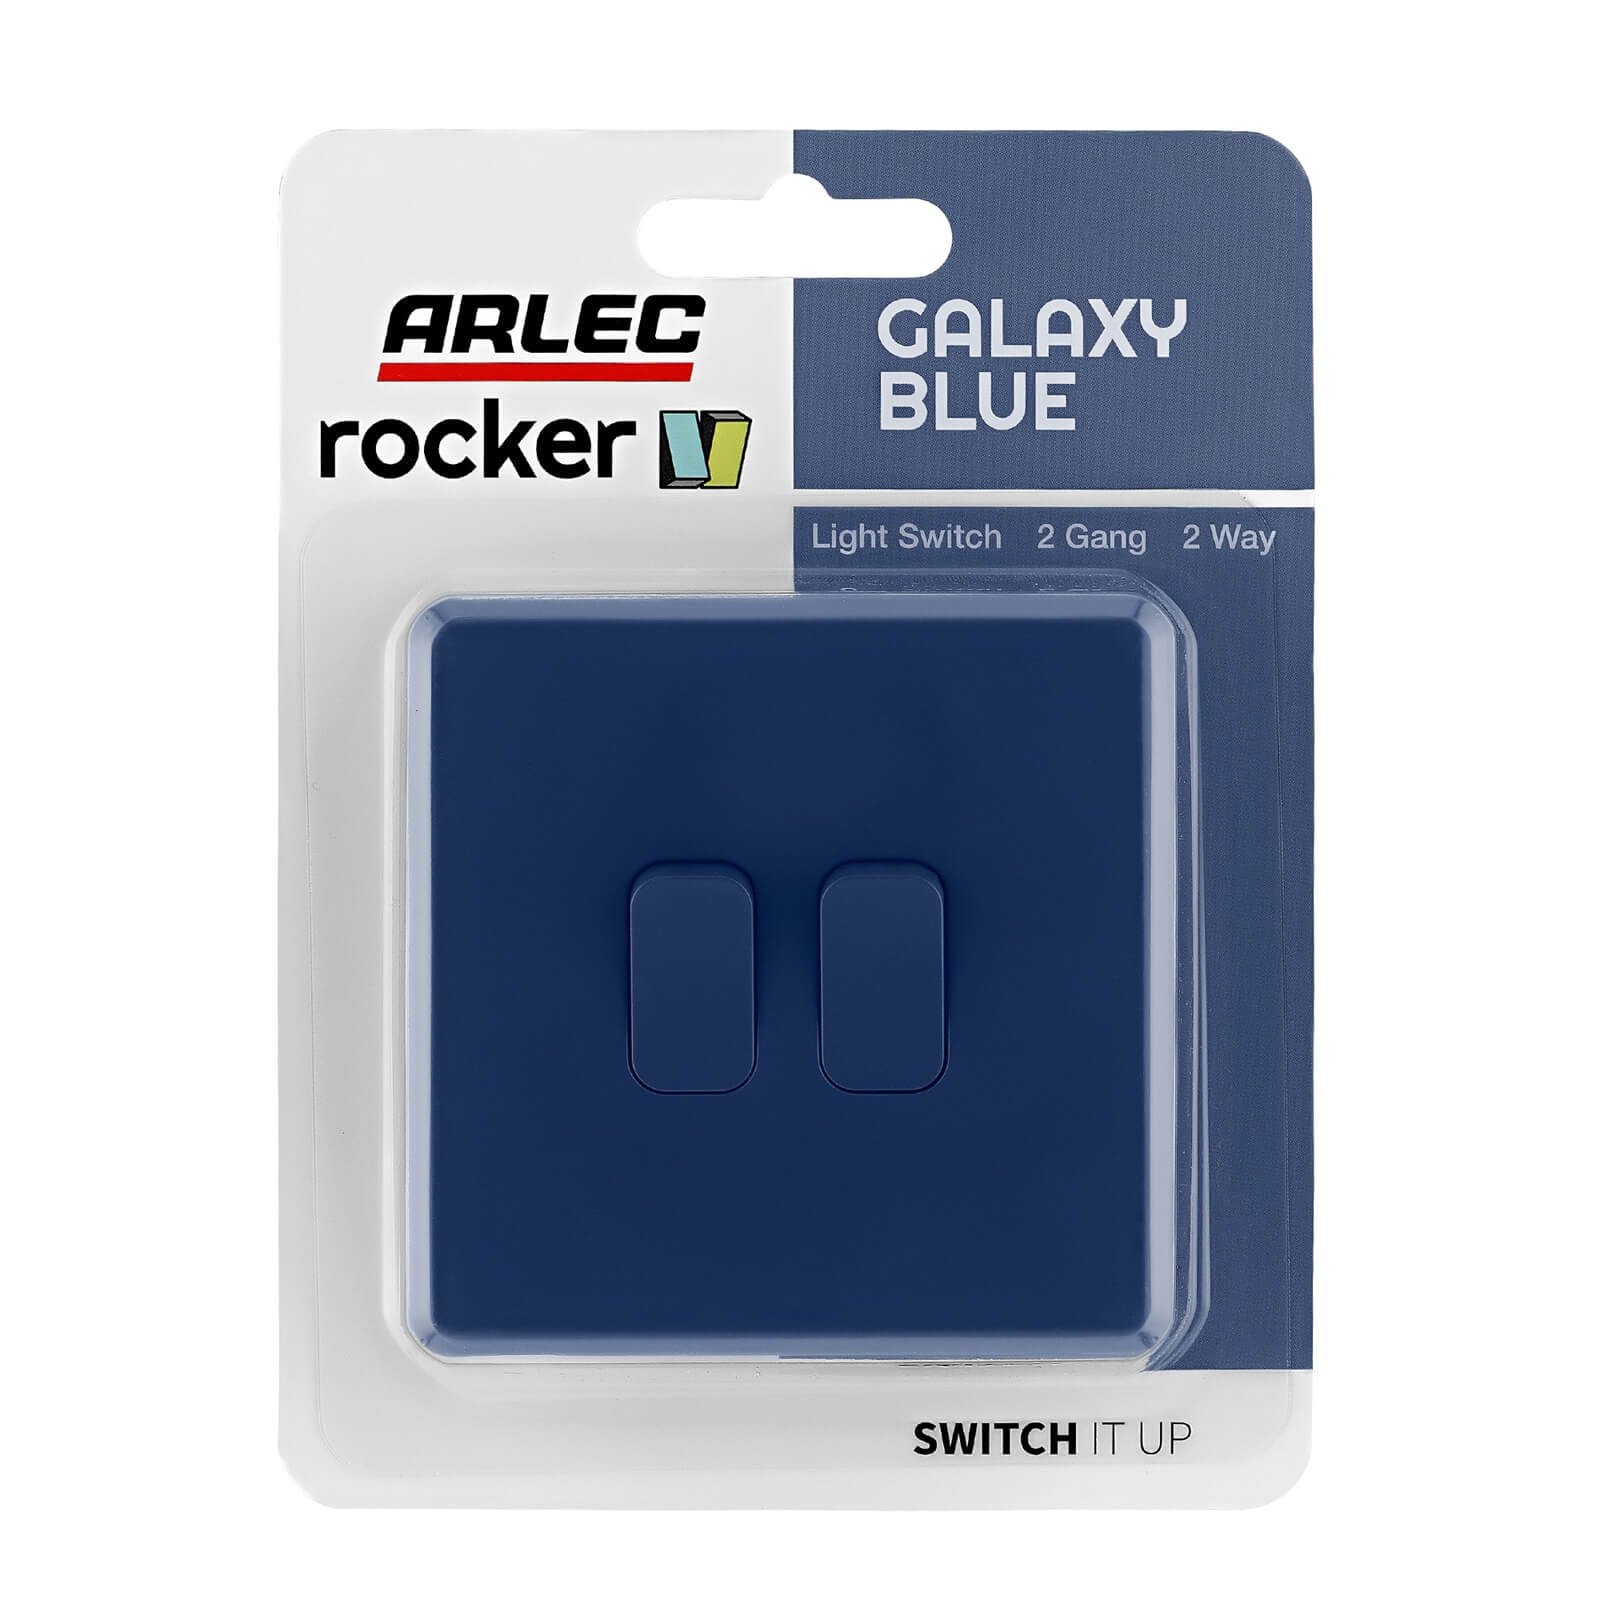 Arlec Rocker 10A 2Gang 2Way Galaxy Blue Double light switch